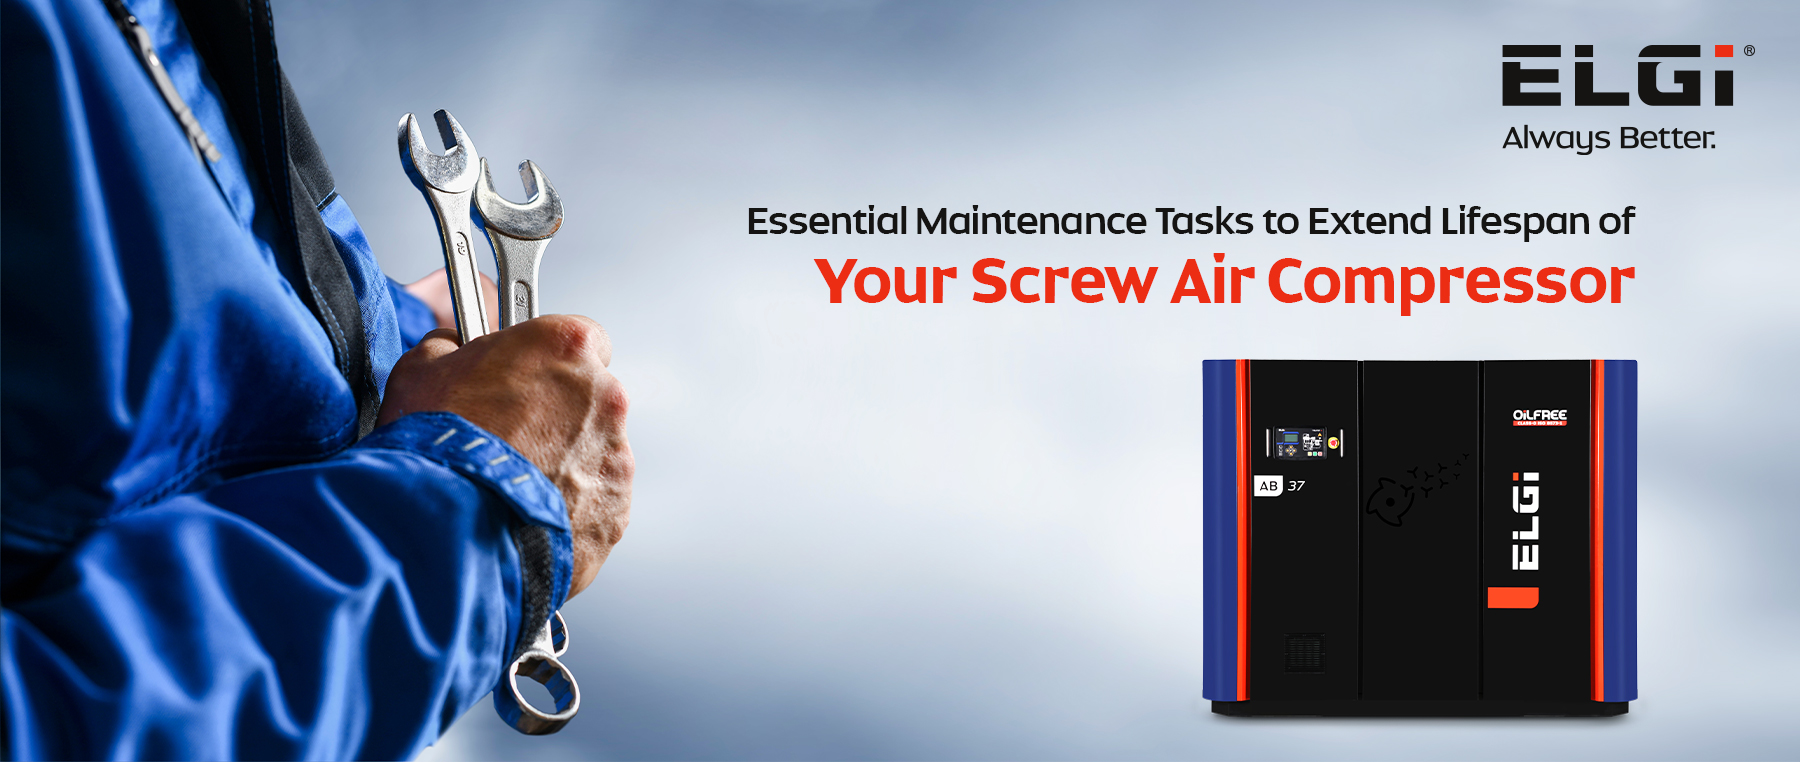 Essential Maintenance Tasks to Extend Lifespan of Your Screw Air Compressor